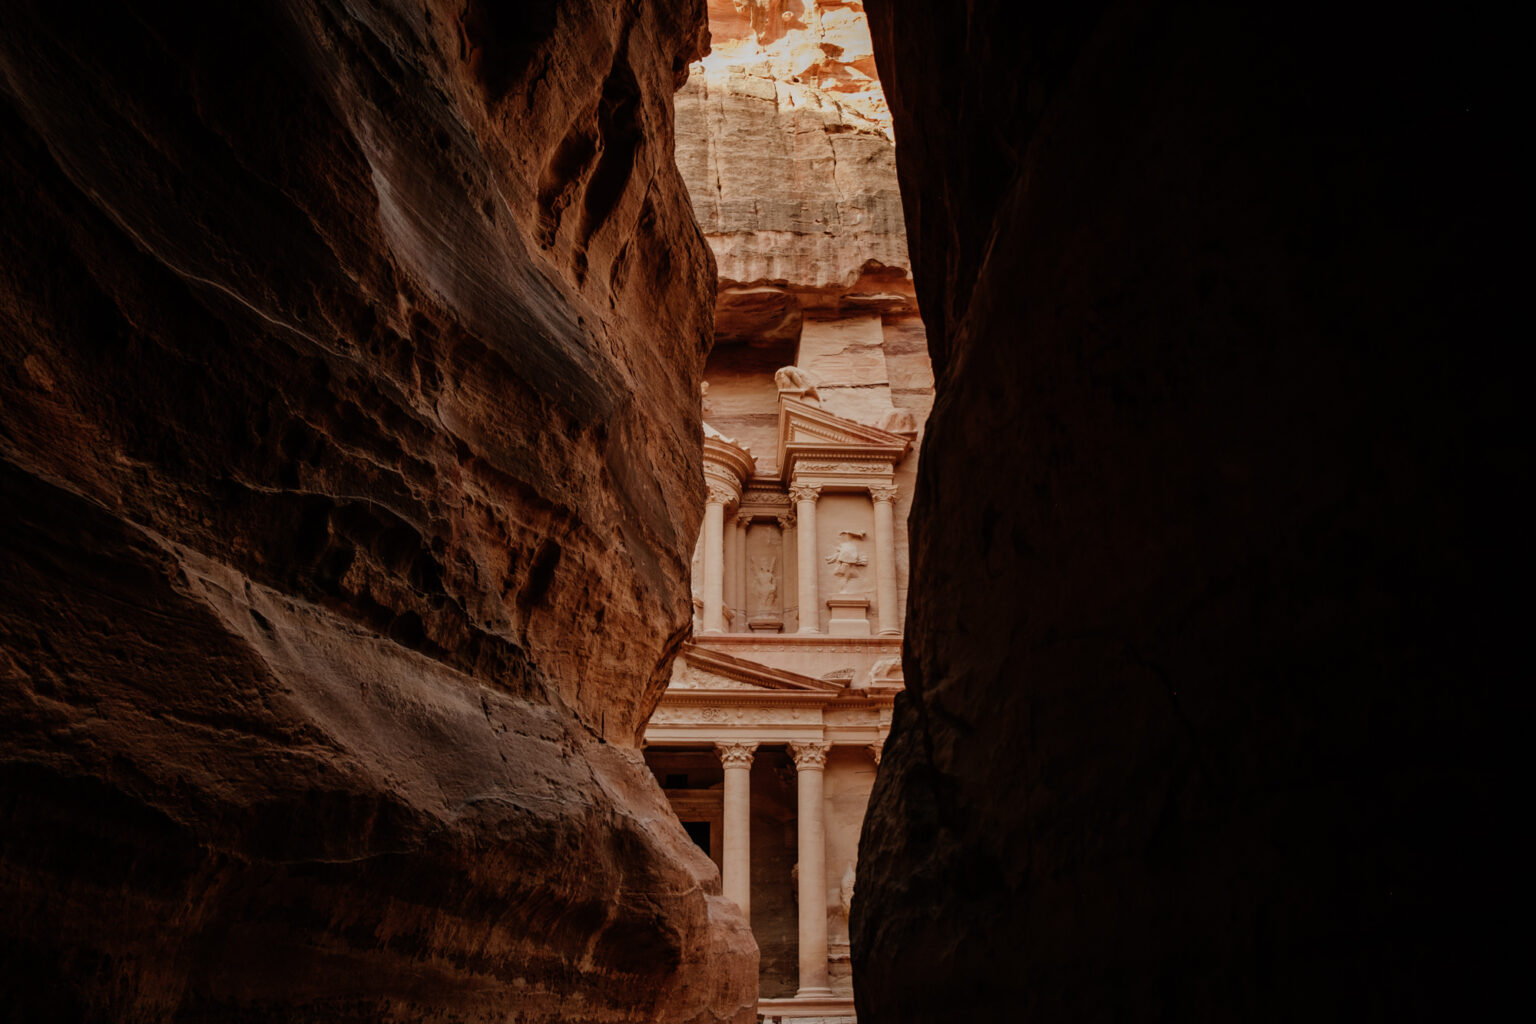 10 Best Hiking Trails In Petra